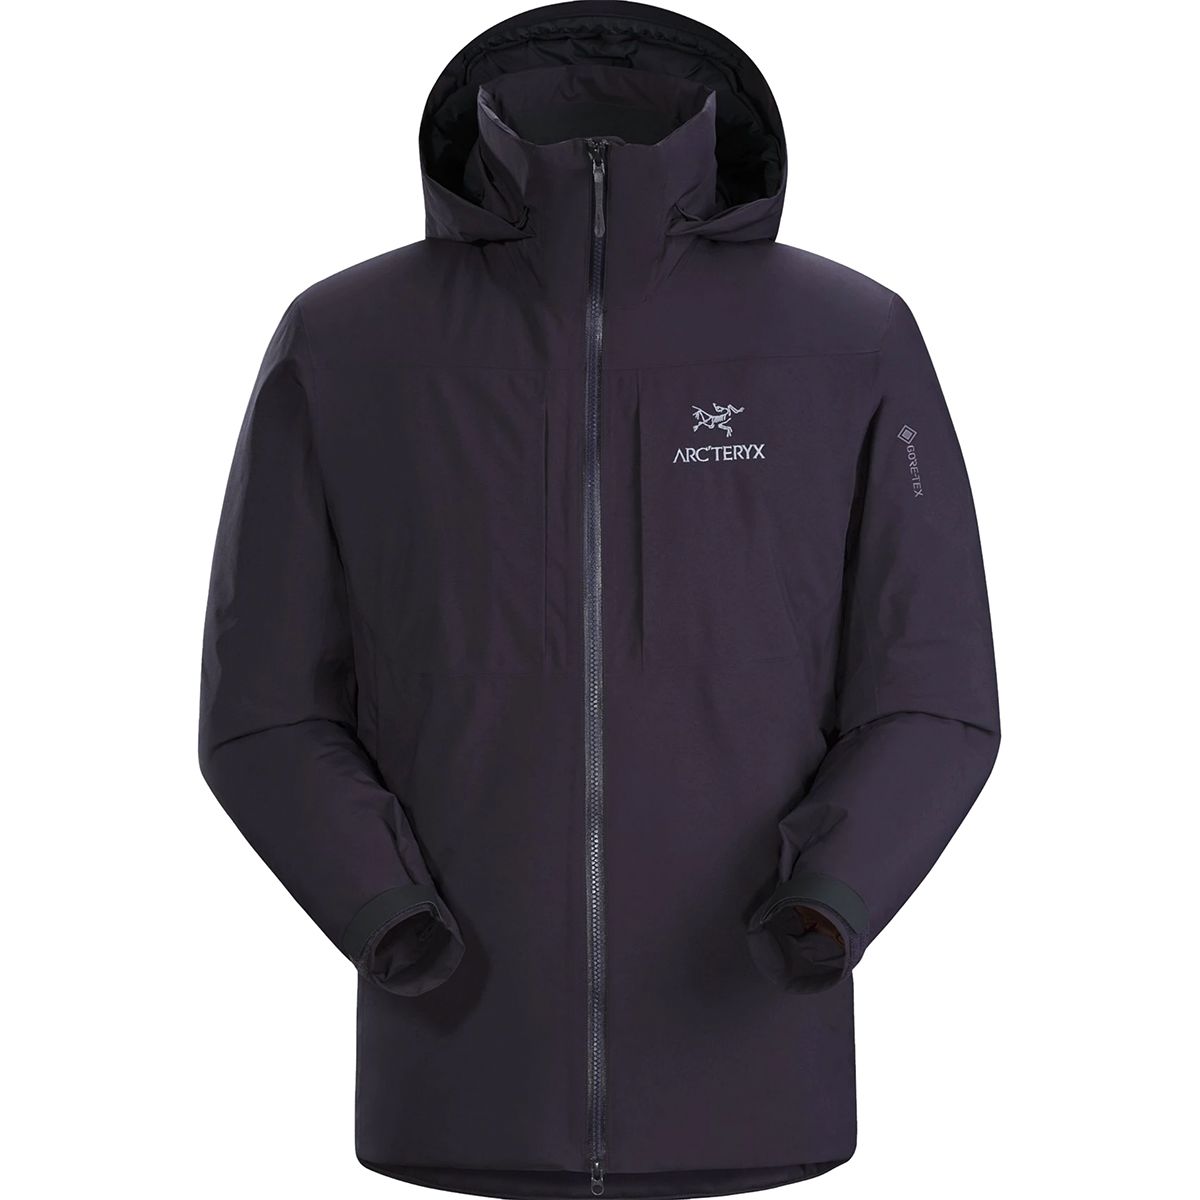 Arcteryx - Men's Jackets, Coats, Cold Weather Parkas. Sustainable ...